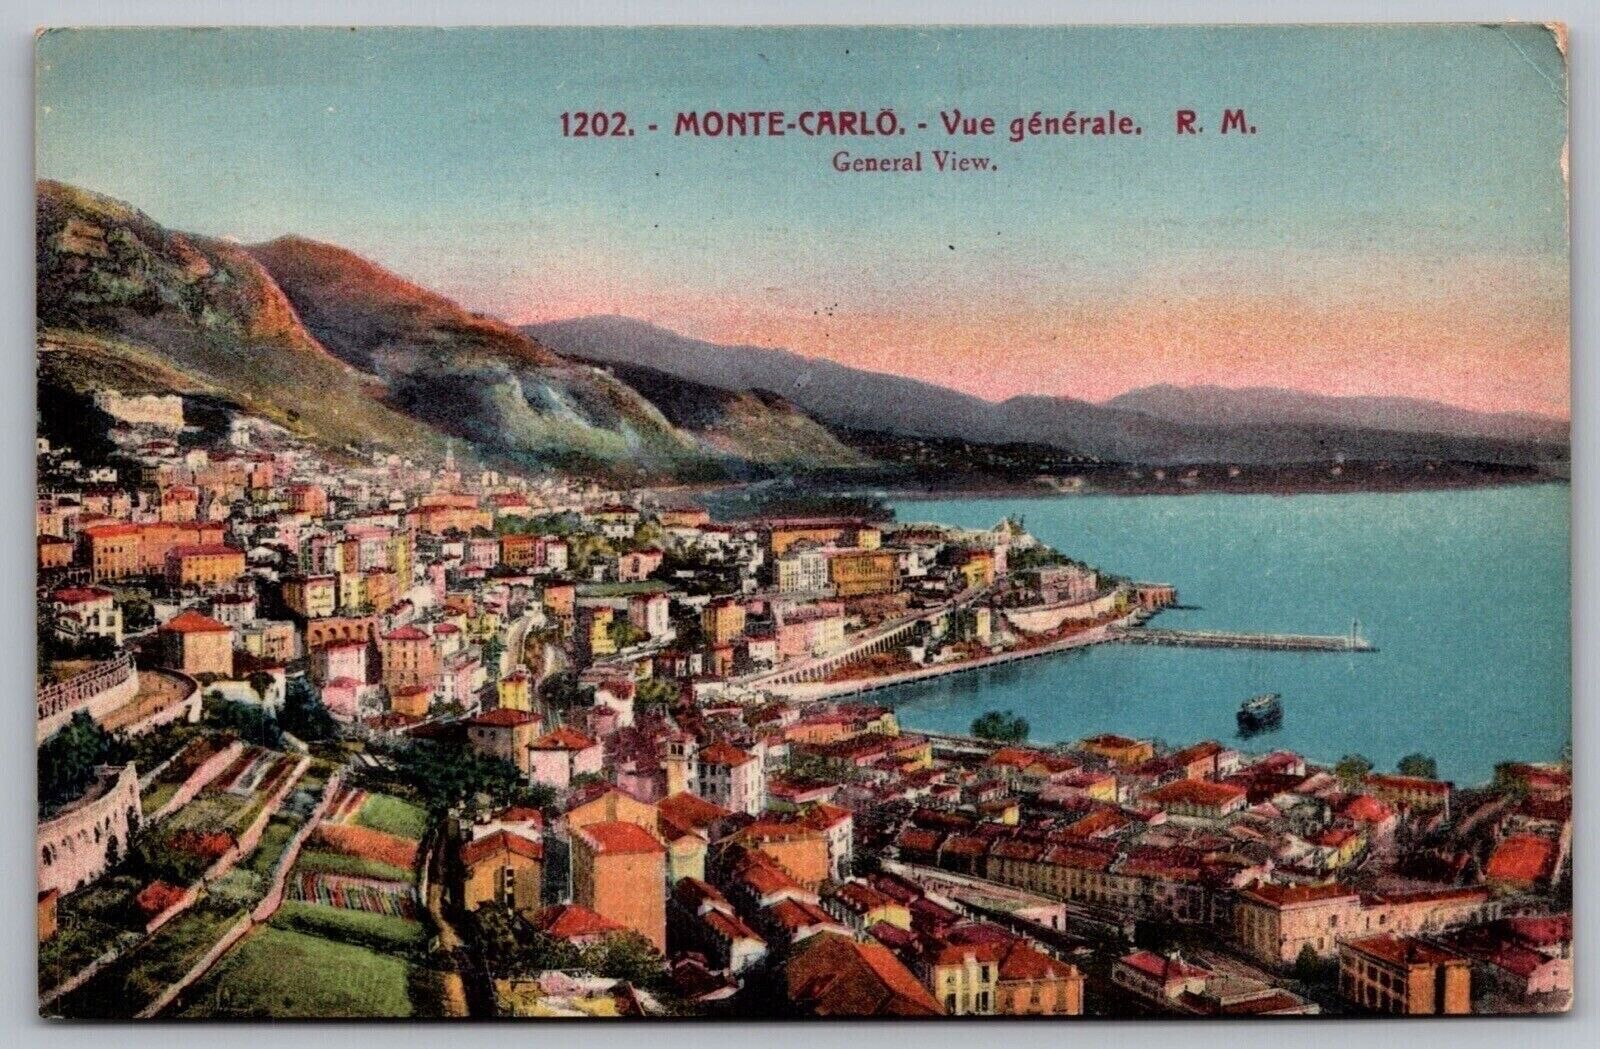 Monte Carlo Monaco General View Scenic European Coastal City DB Postcard